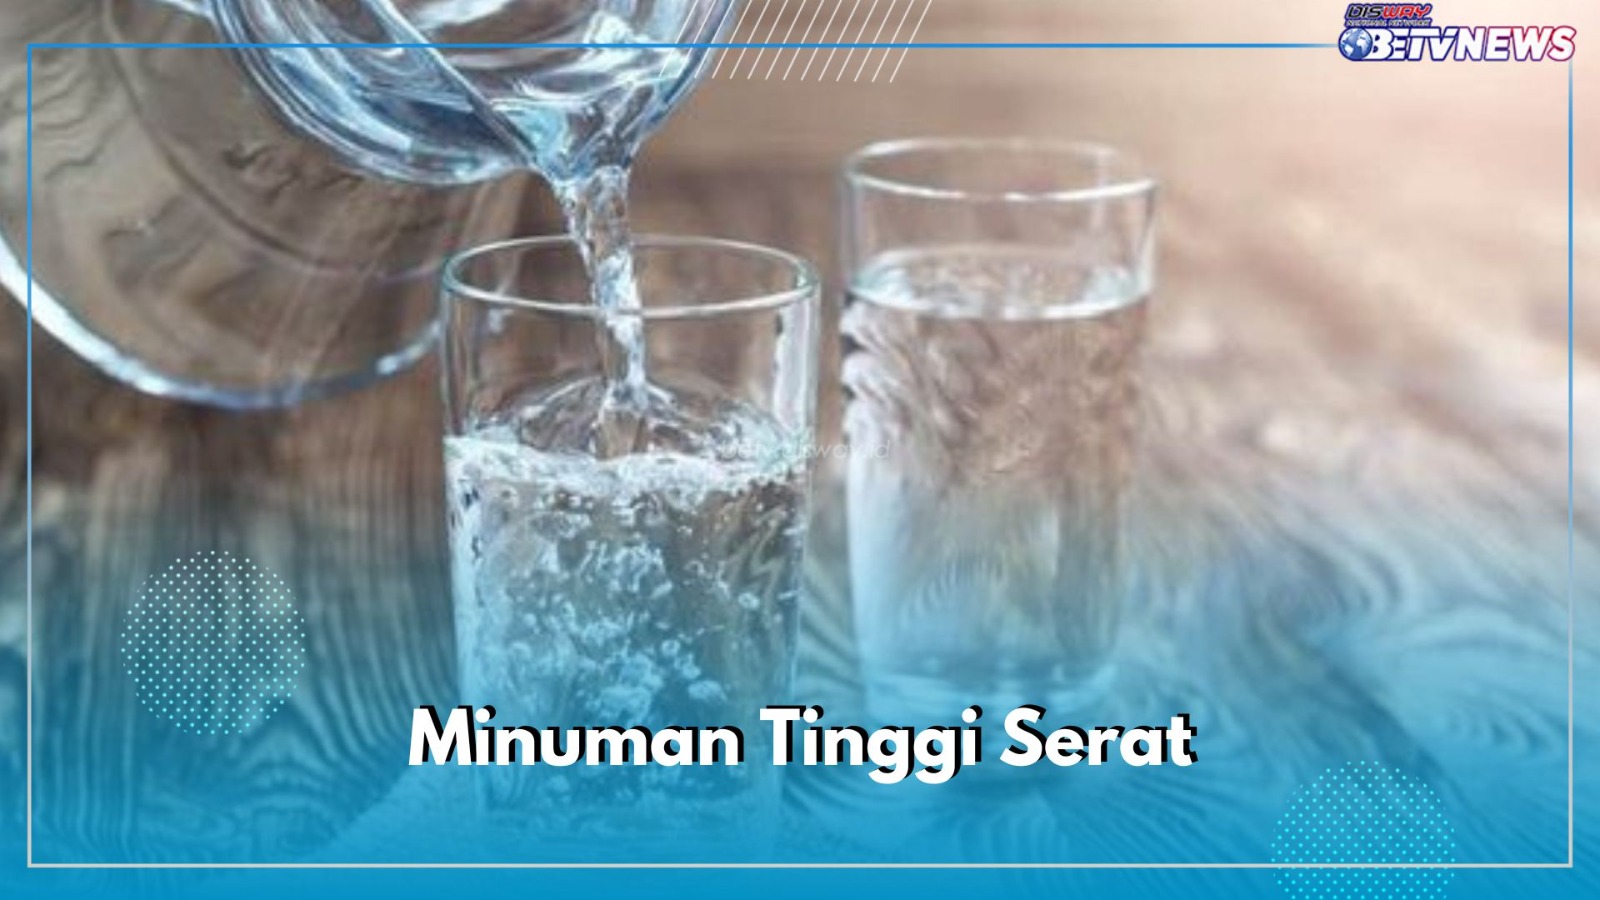 Lancarkan Pencernaan, Berikut 5 Rekomendasi Minuman Tinggi Serat Buat Kamu yang Susah Buang Air Besar